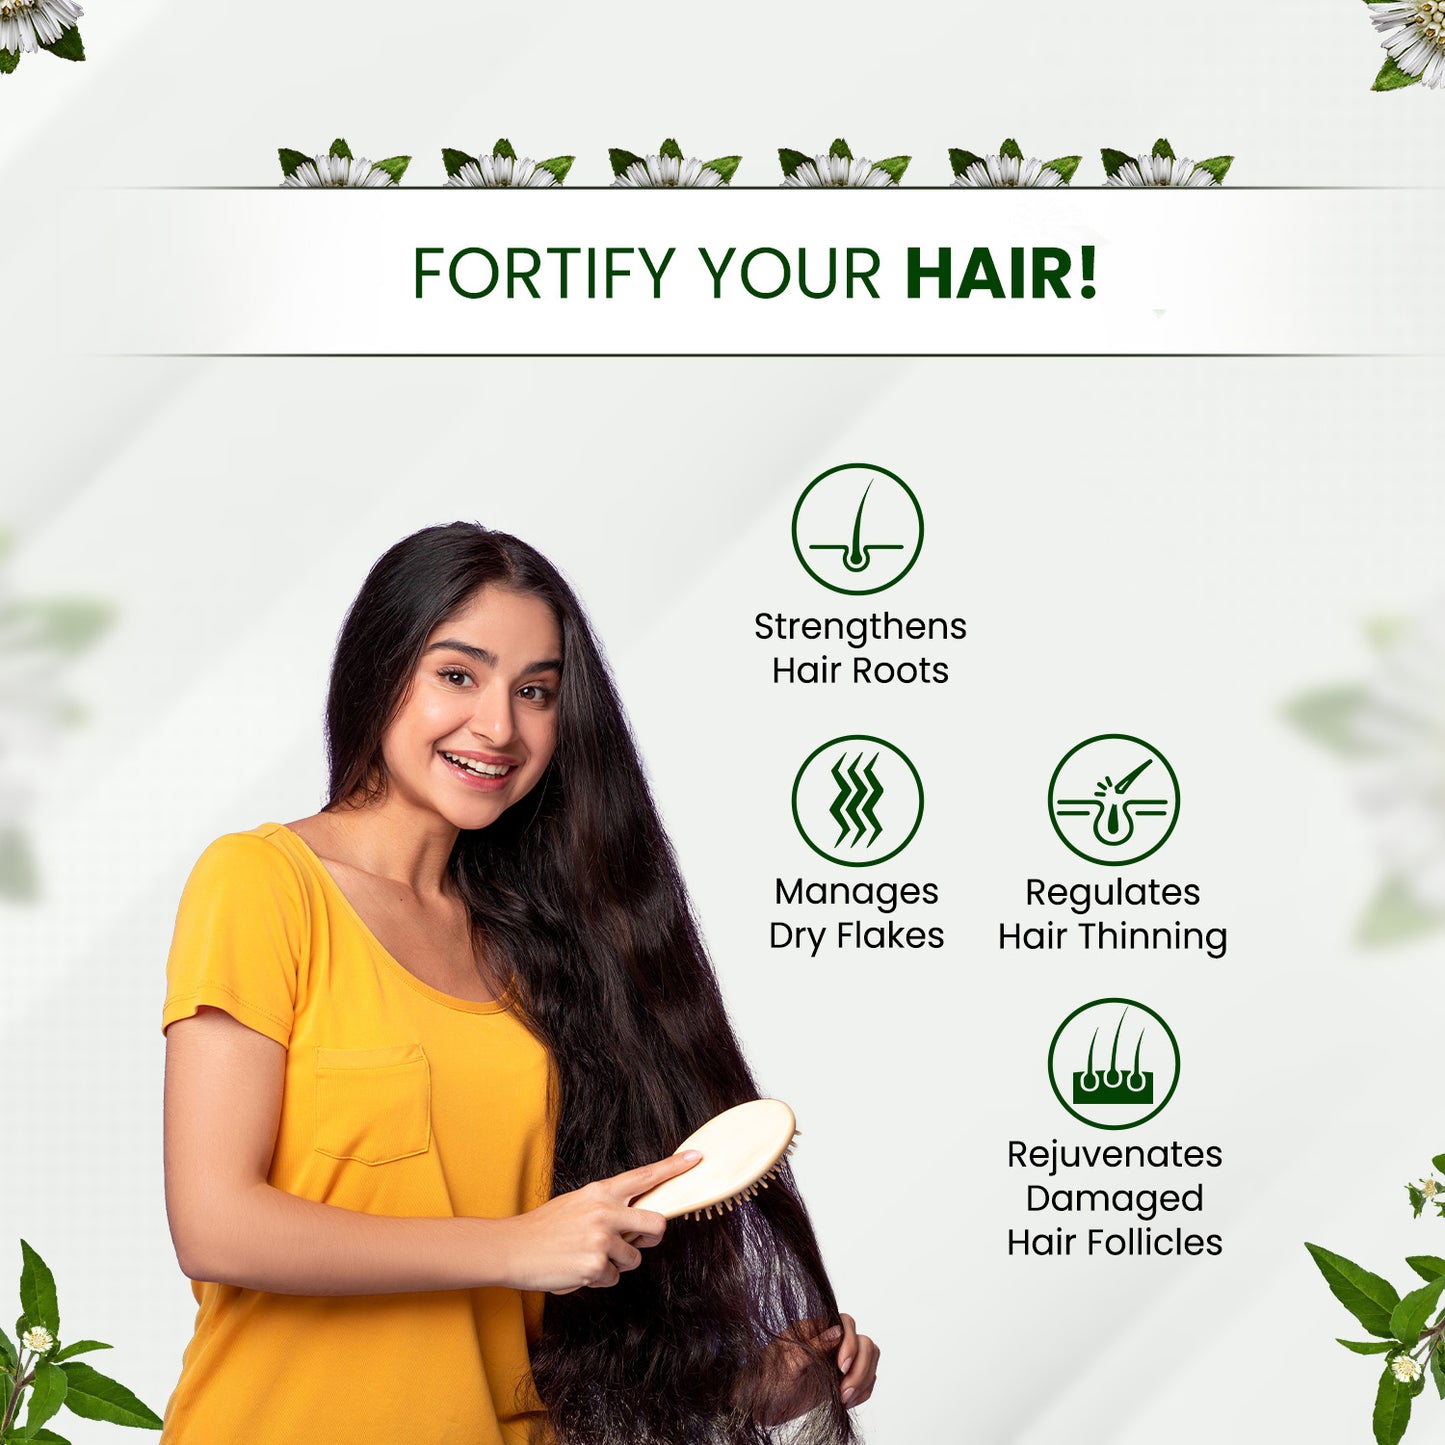 Himalayan Organics Bhringraj Oil - Controls Hair Fall - Promotes Hair Growth - 200ml